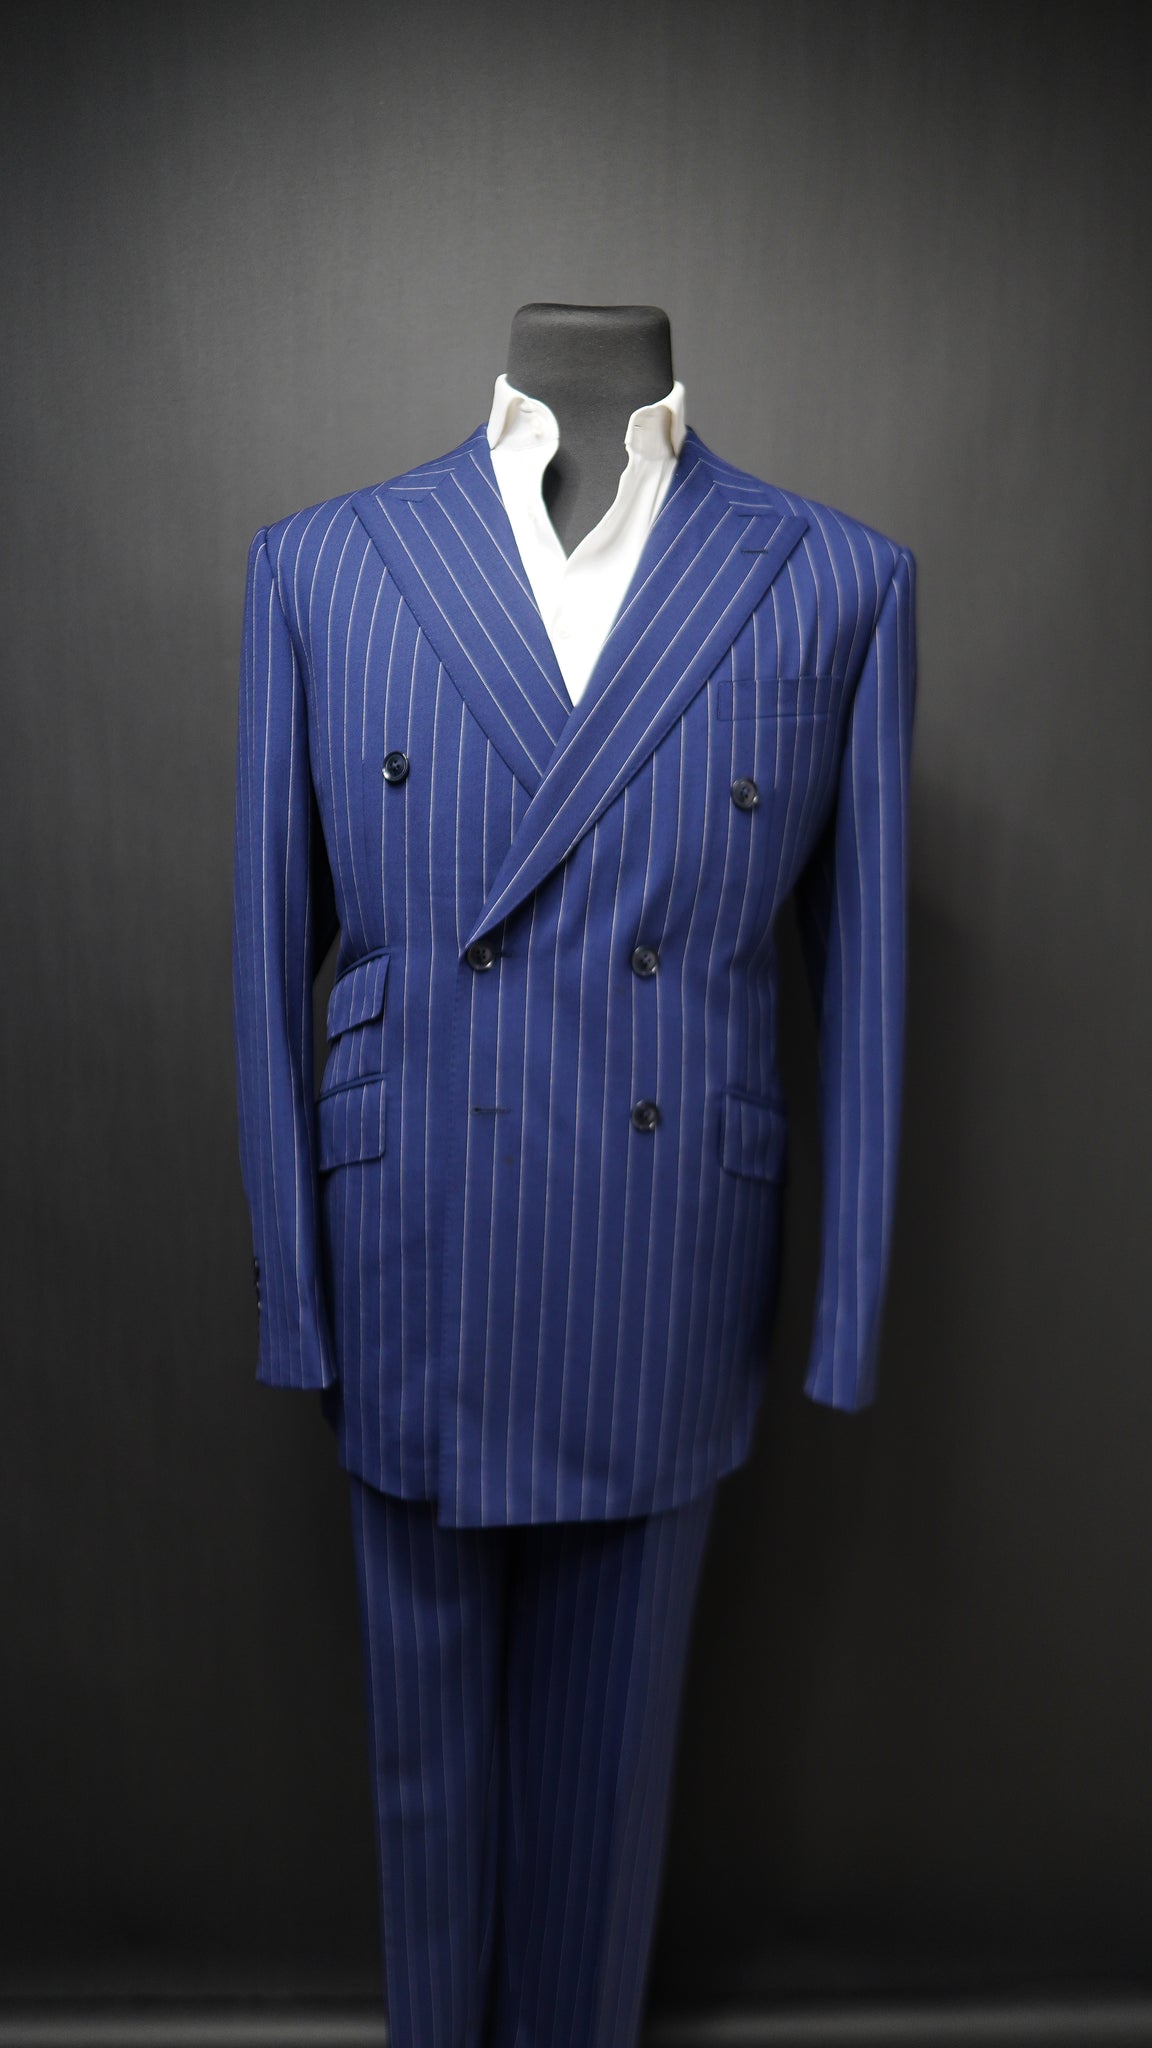 Navy Blue pinstripe suit